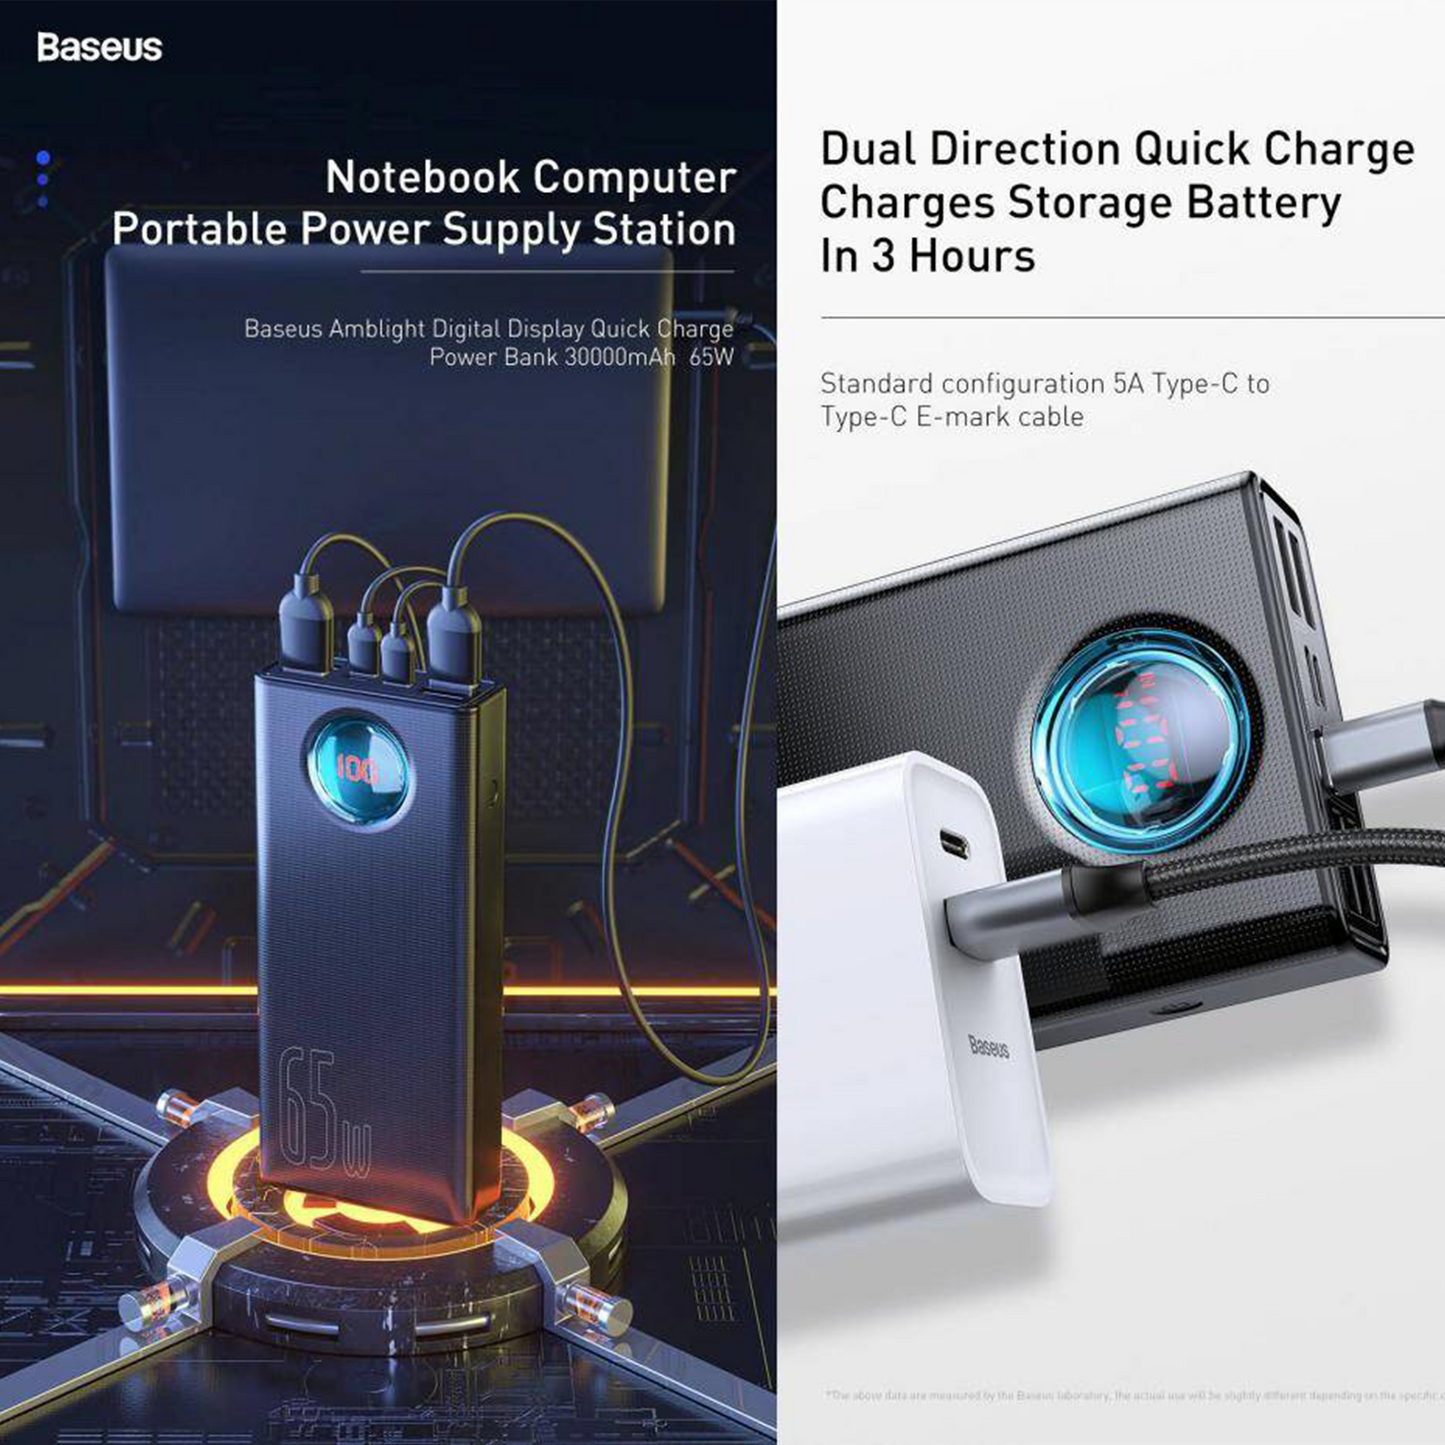 Baseus 30000mAh PowerBank, 65W Quick Charge with Amblight Digital Display